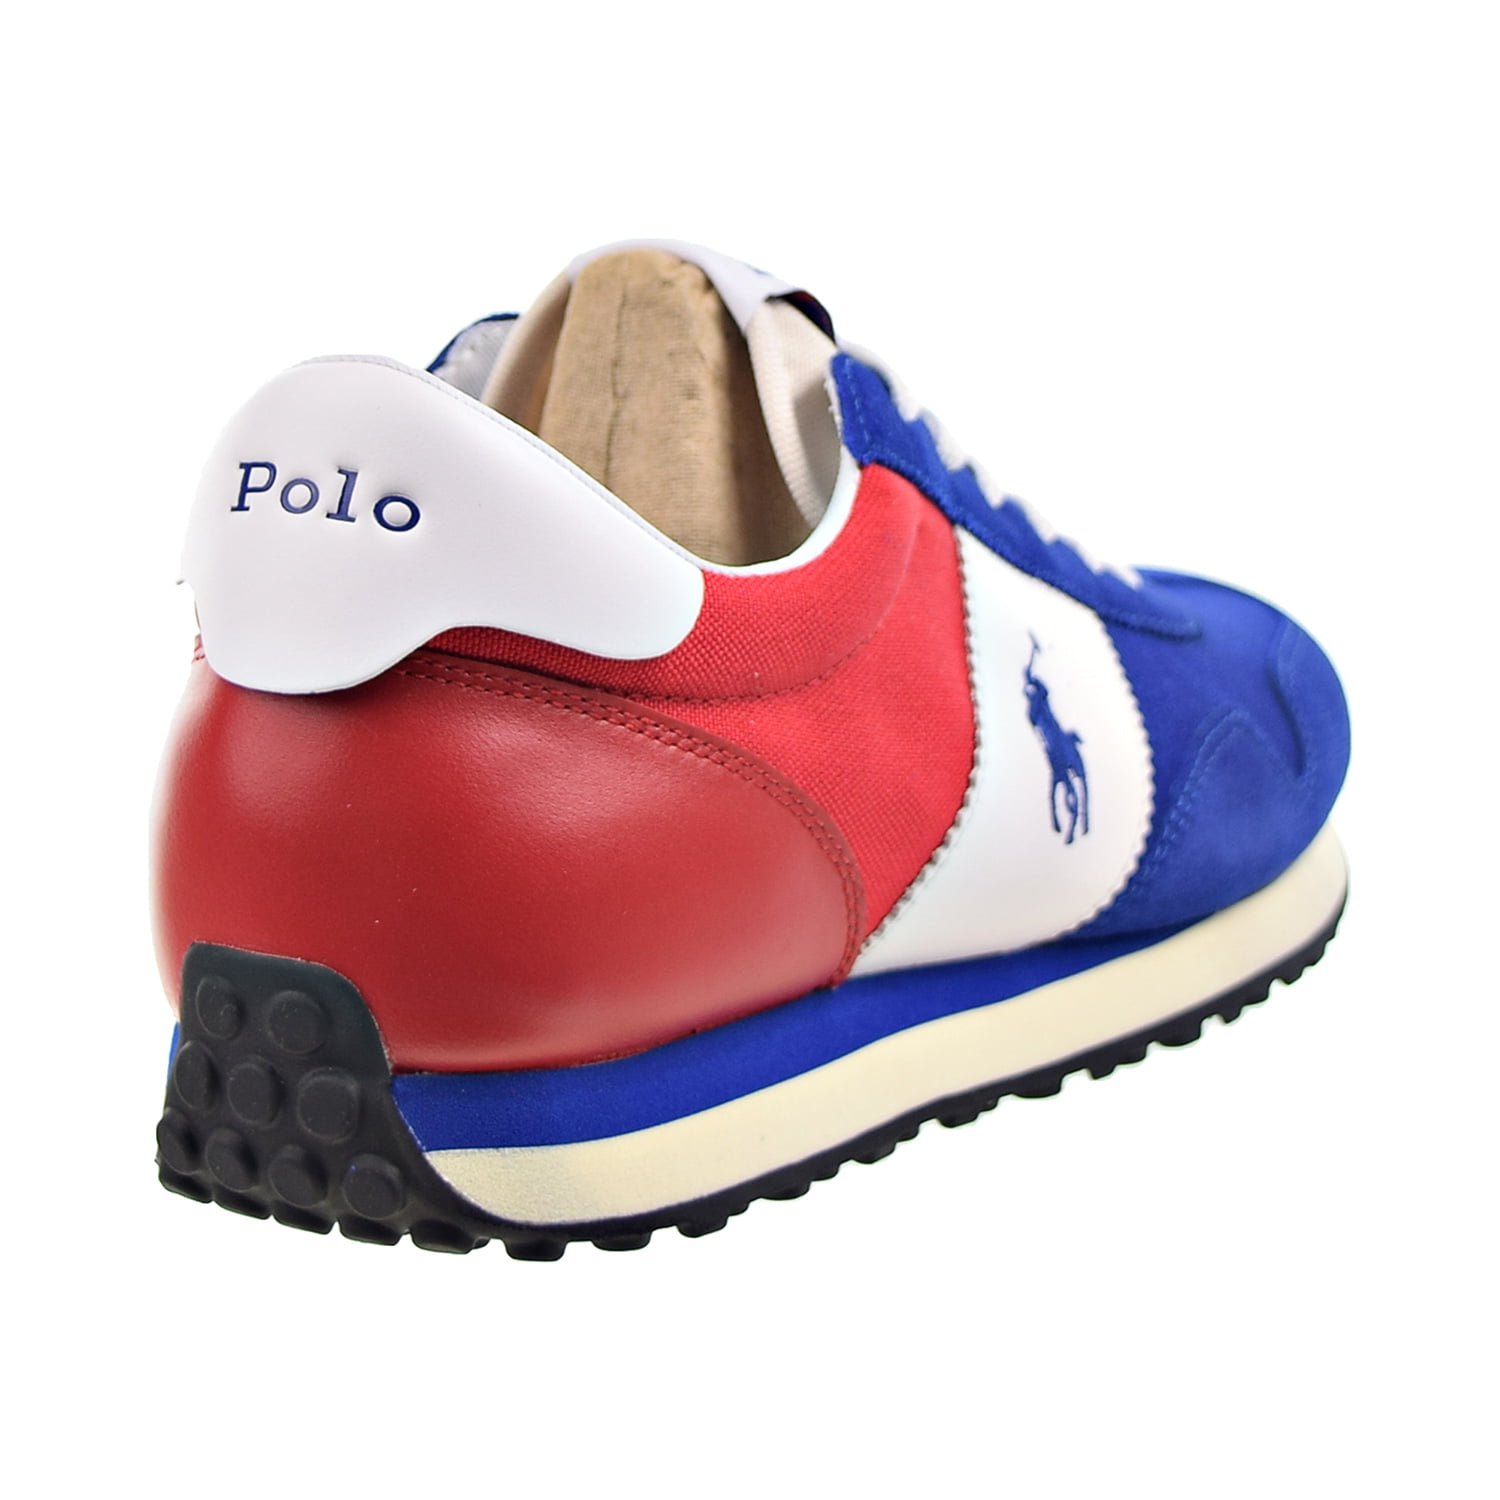 Polo Ralph Lauren Train 85 Men's Shoes Blue-Red-White 809830109-002